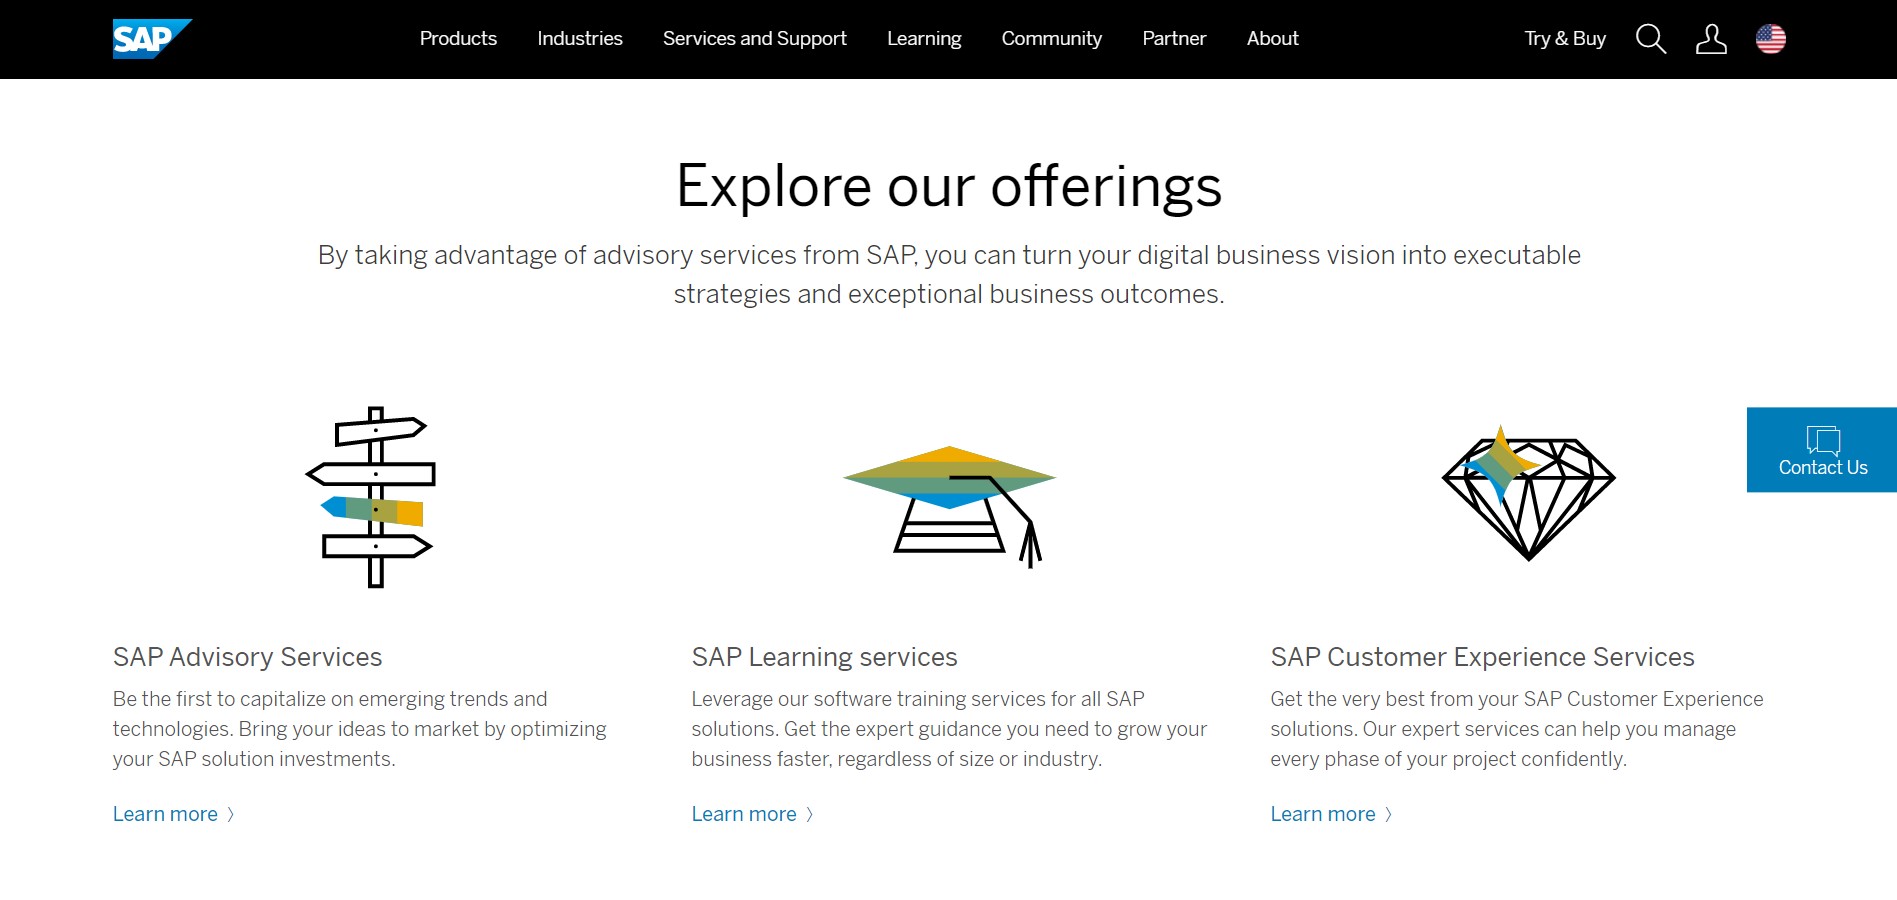 SAP product / service